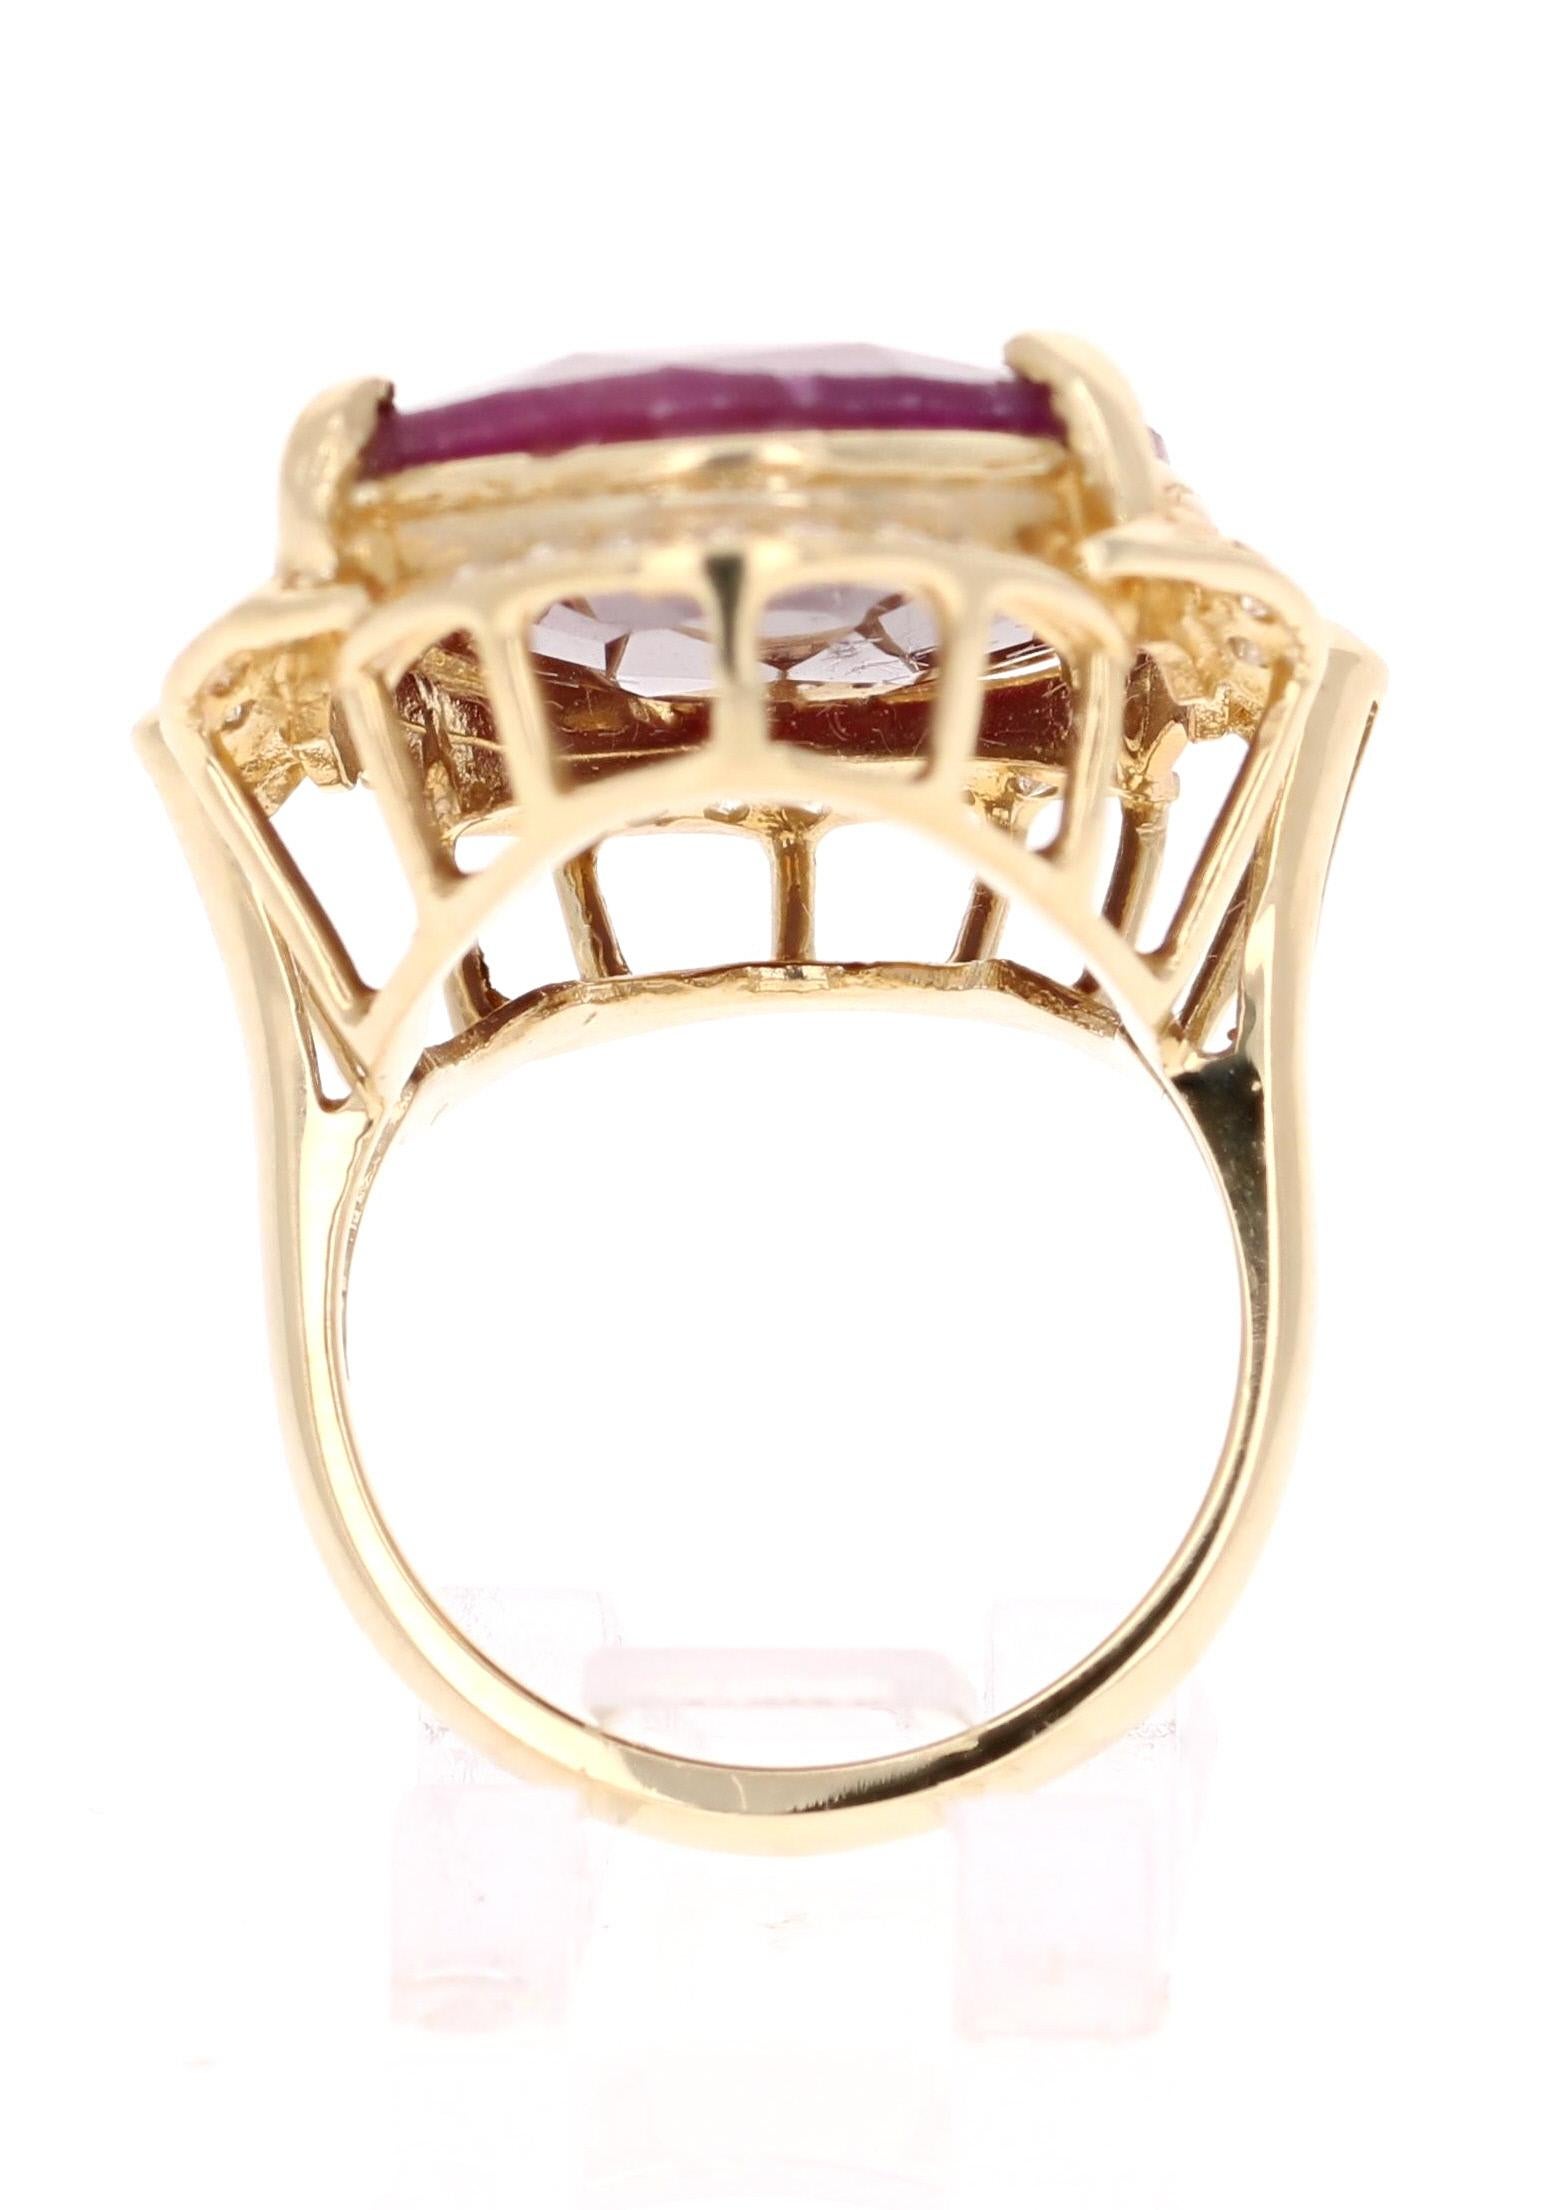 Oval Cut 25.59 Carat Ruby Diamond Yellow Gold Ring